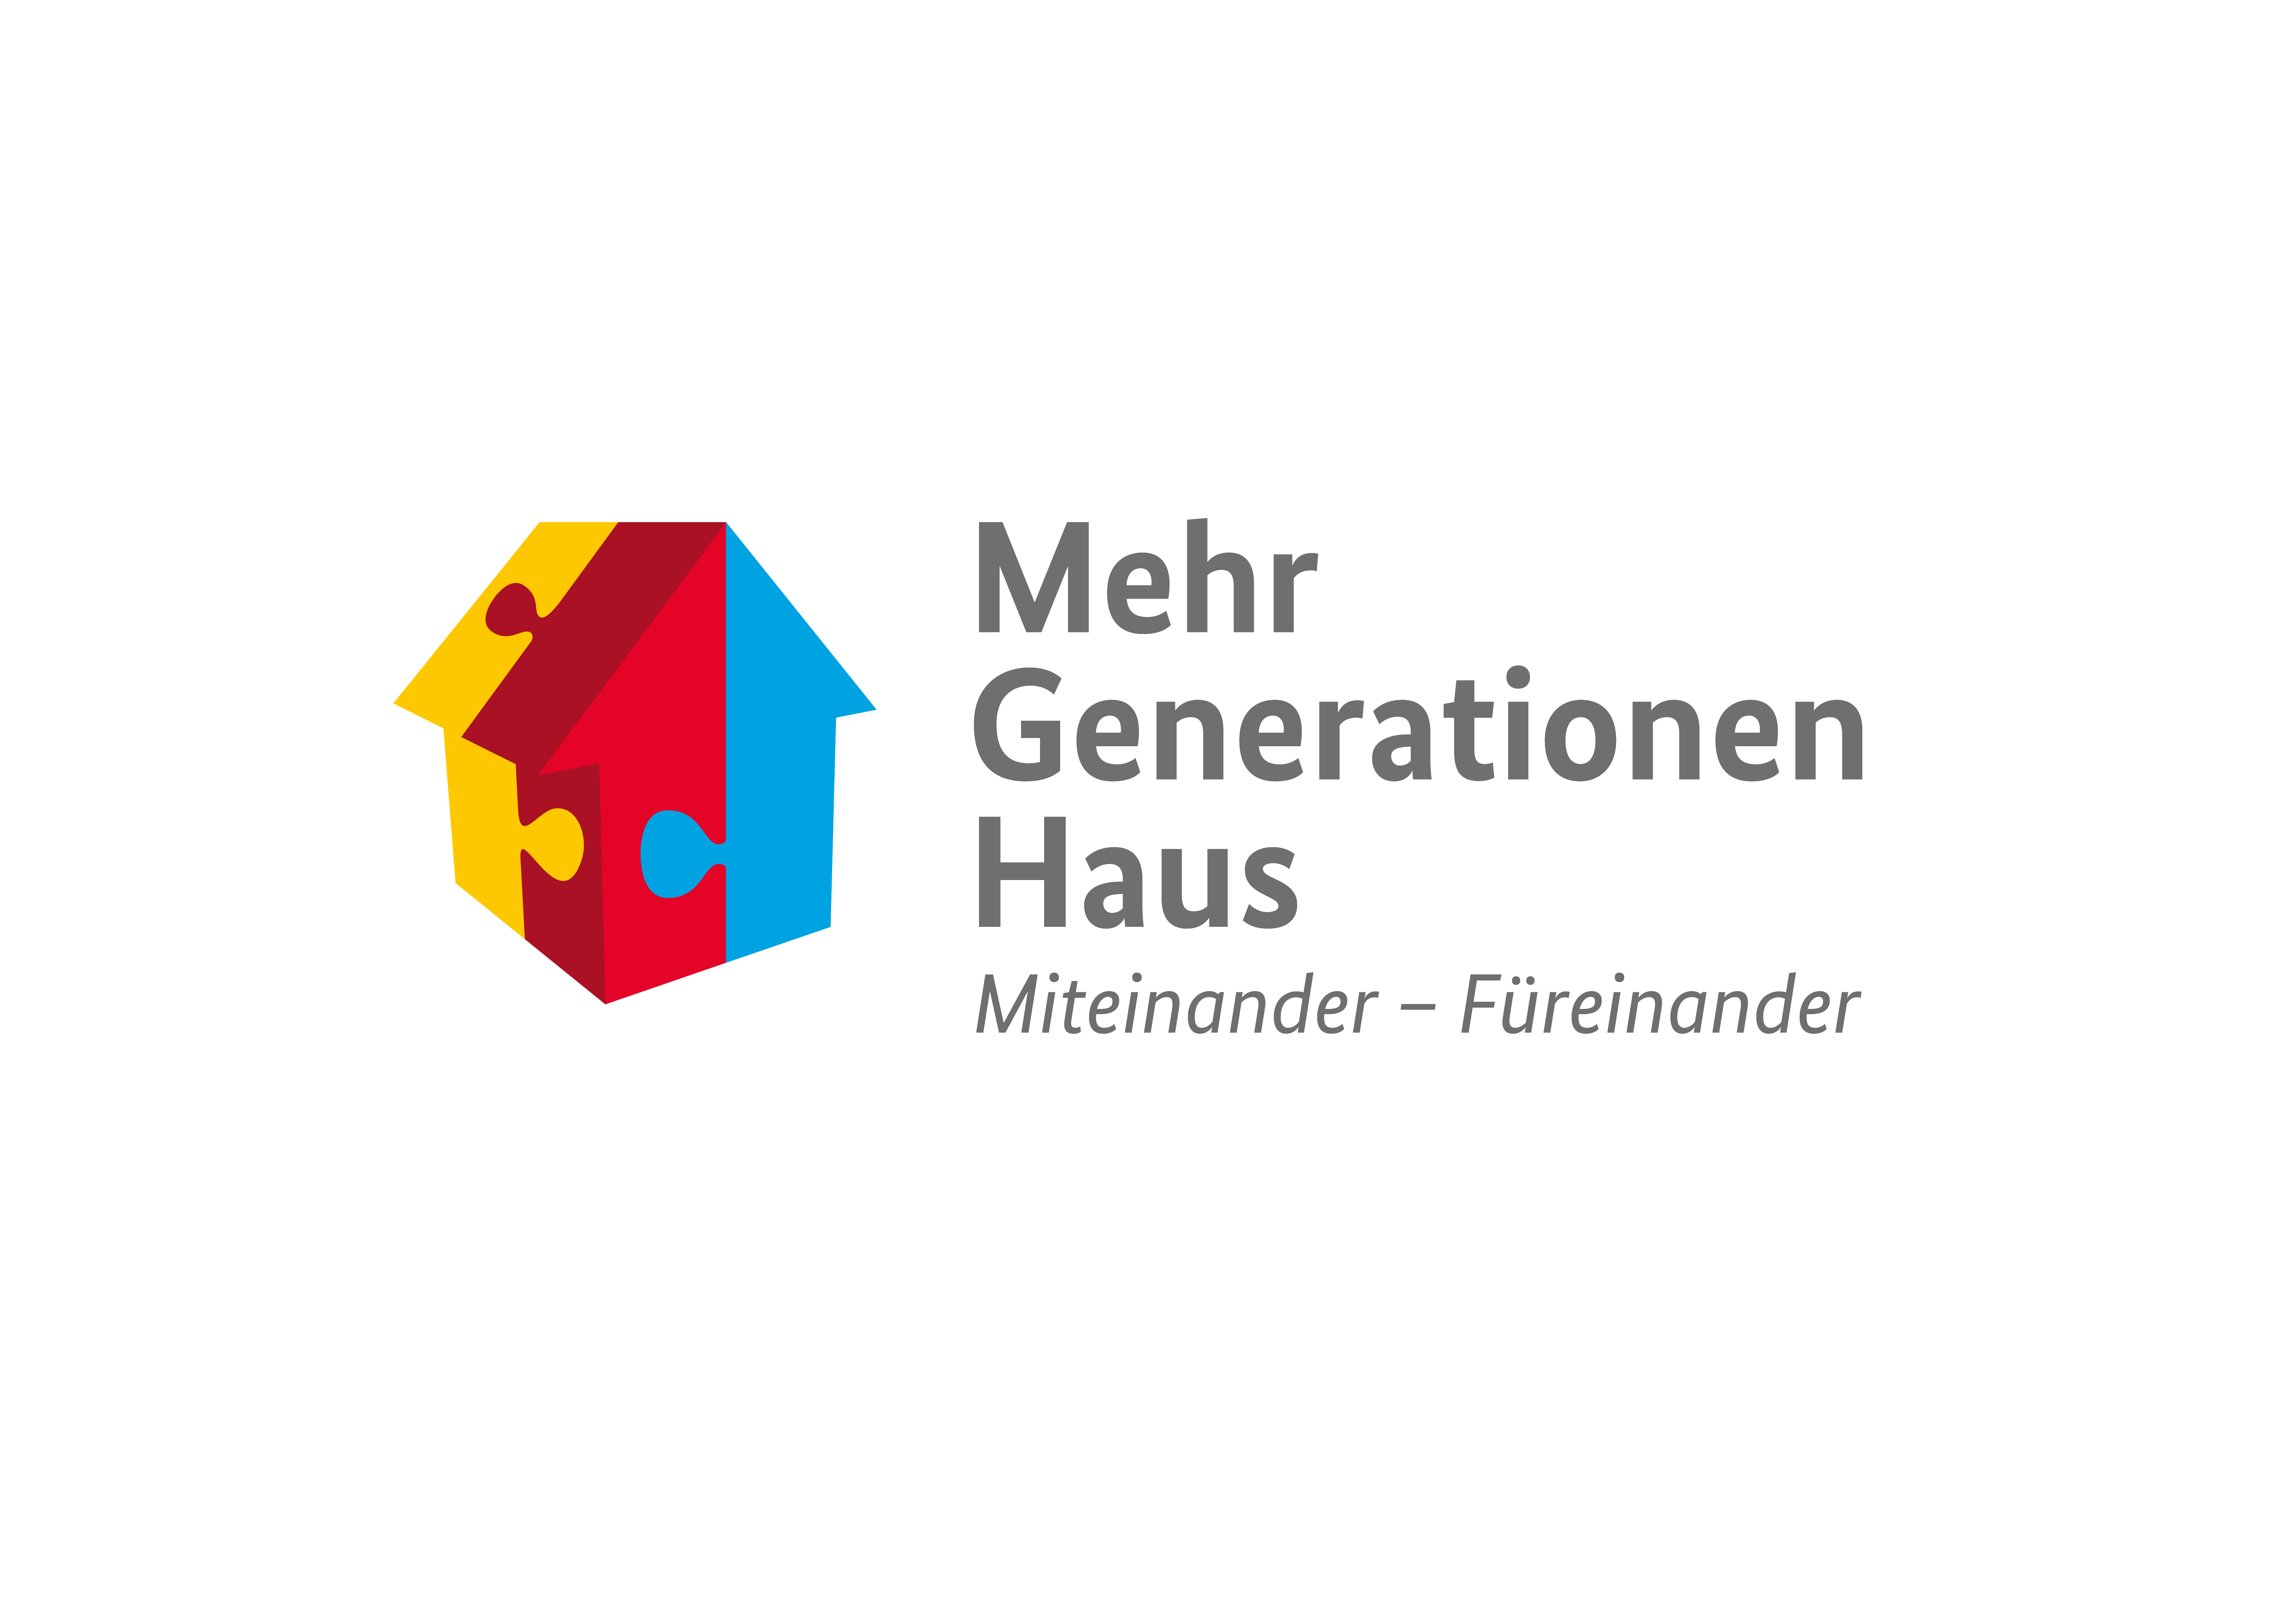 MGH-Logo